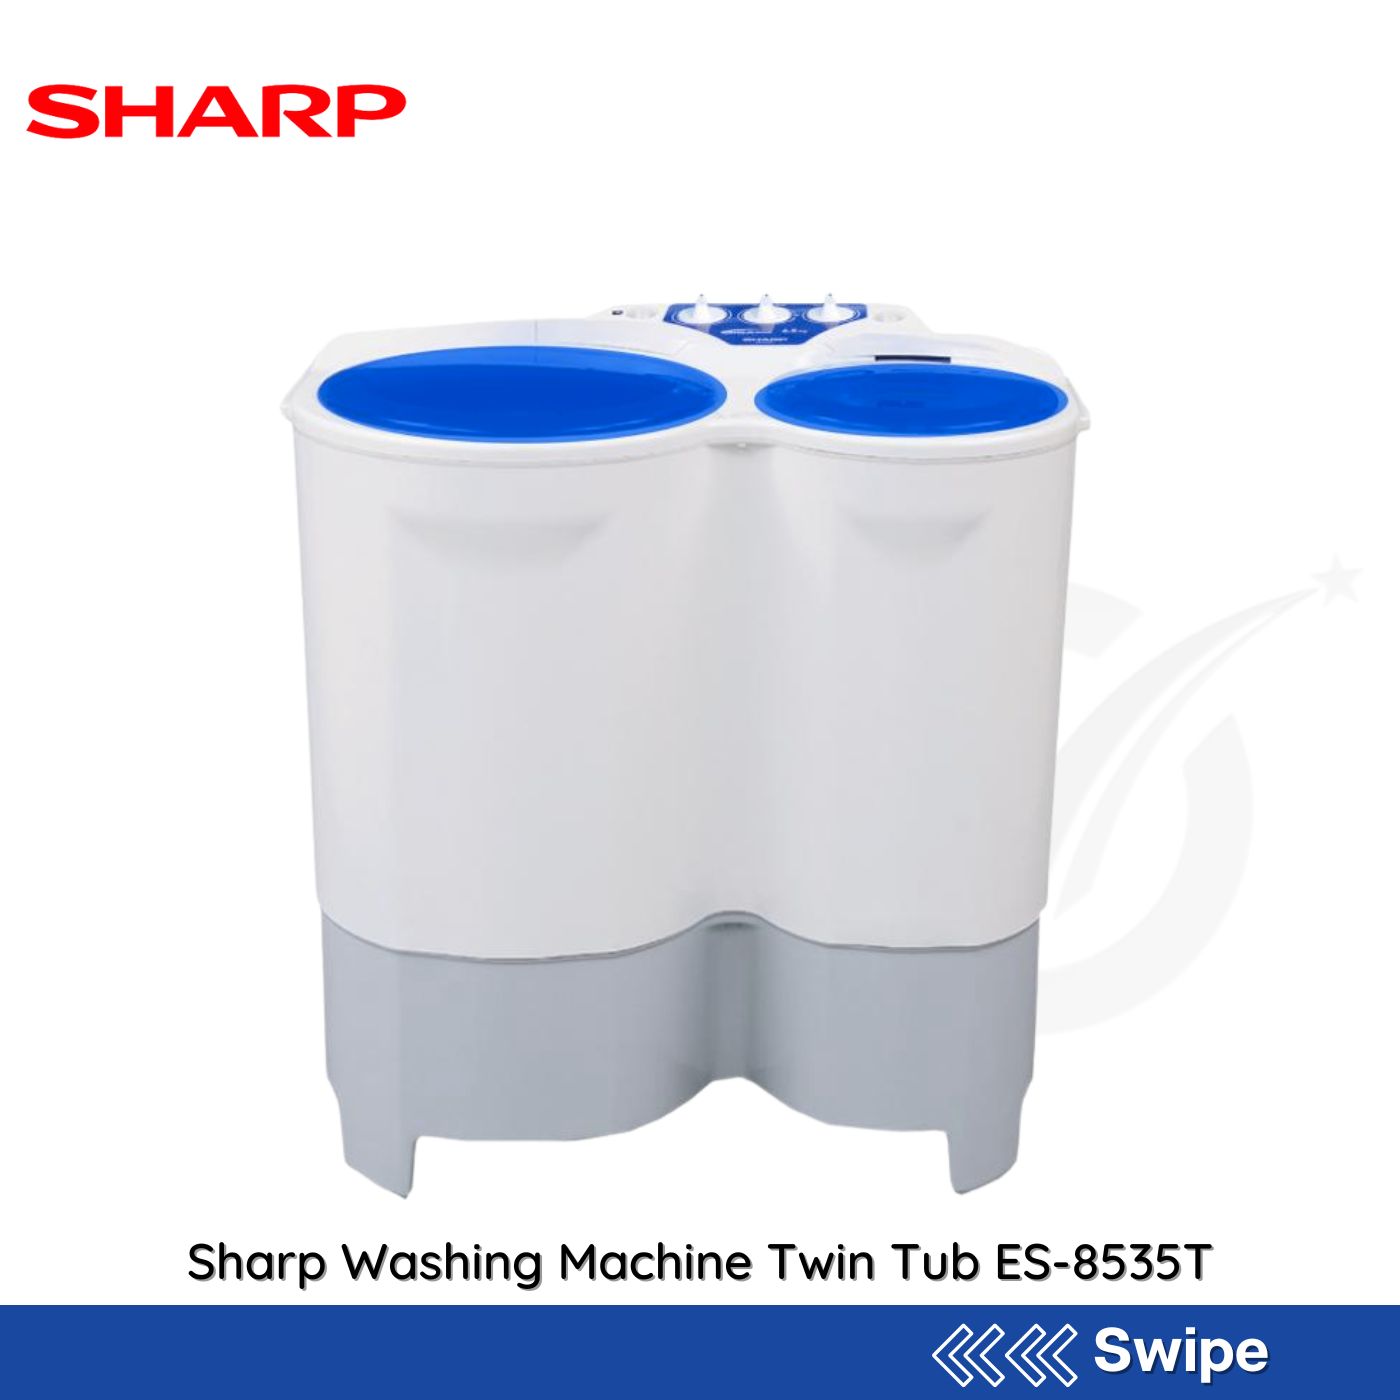 Sharp Washing Machine Twin Tub ES-8535T